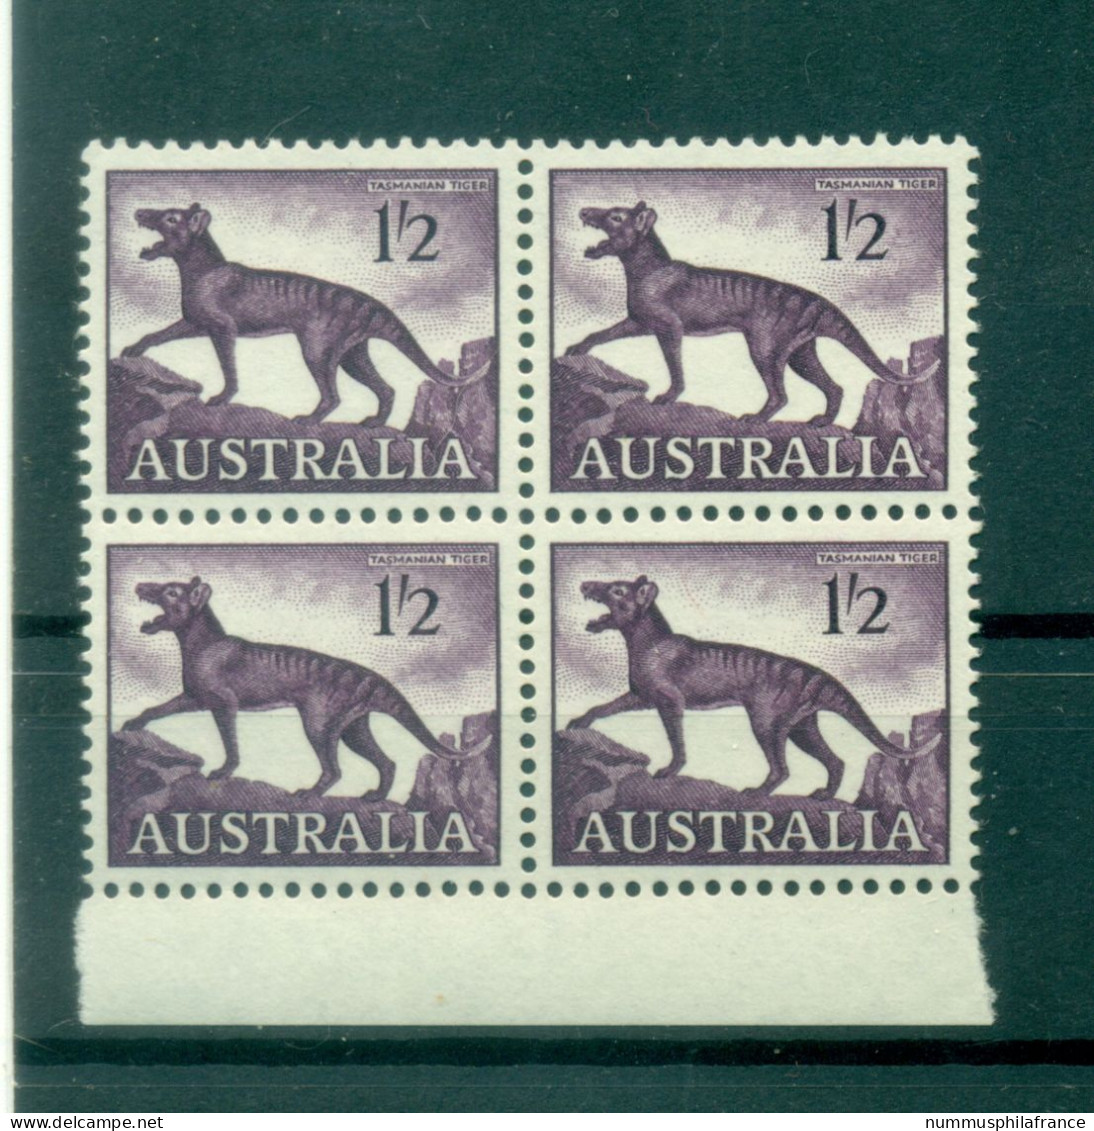 Australie 1959-62 - Y & T N. 255A - Série Courante (Michel N. 311 X) - Neufs